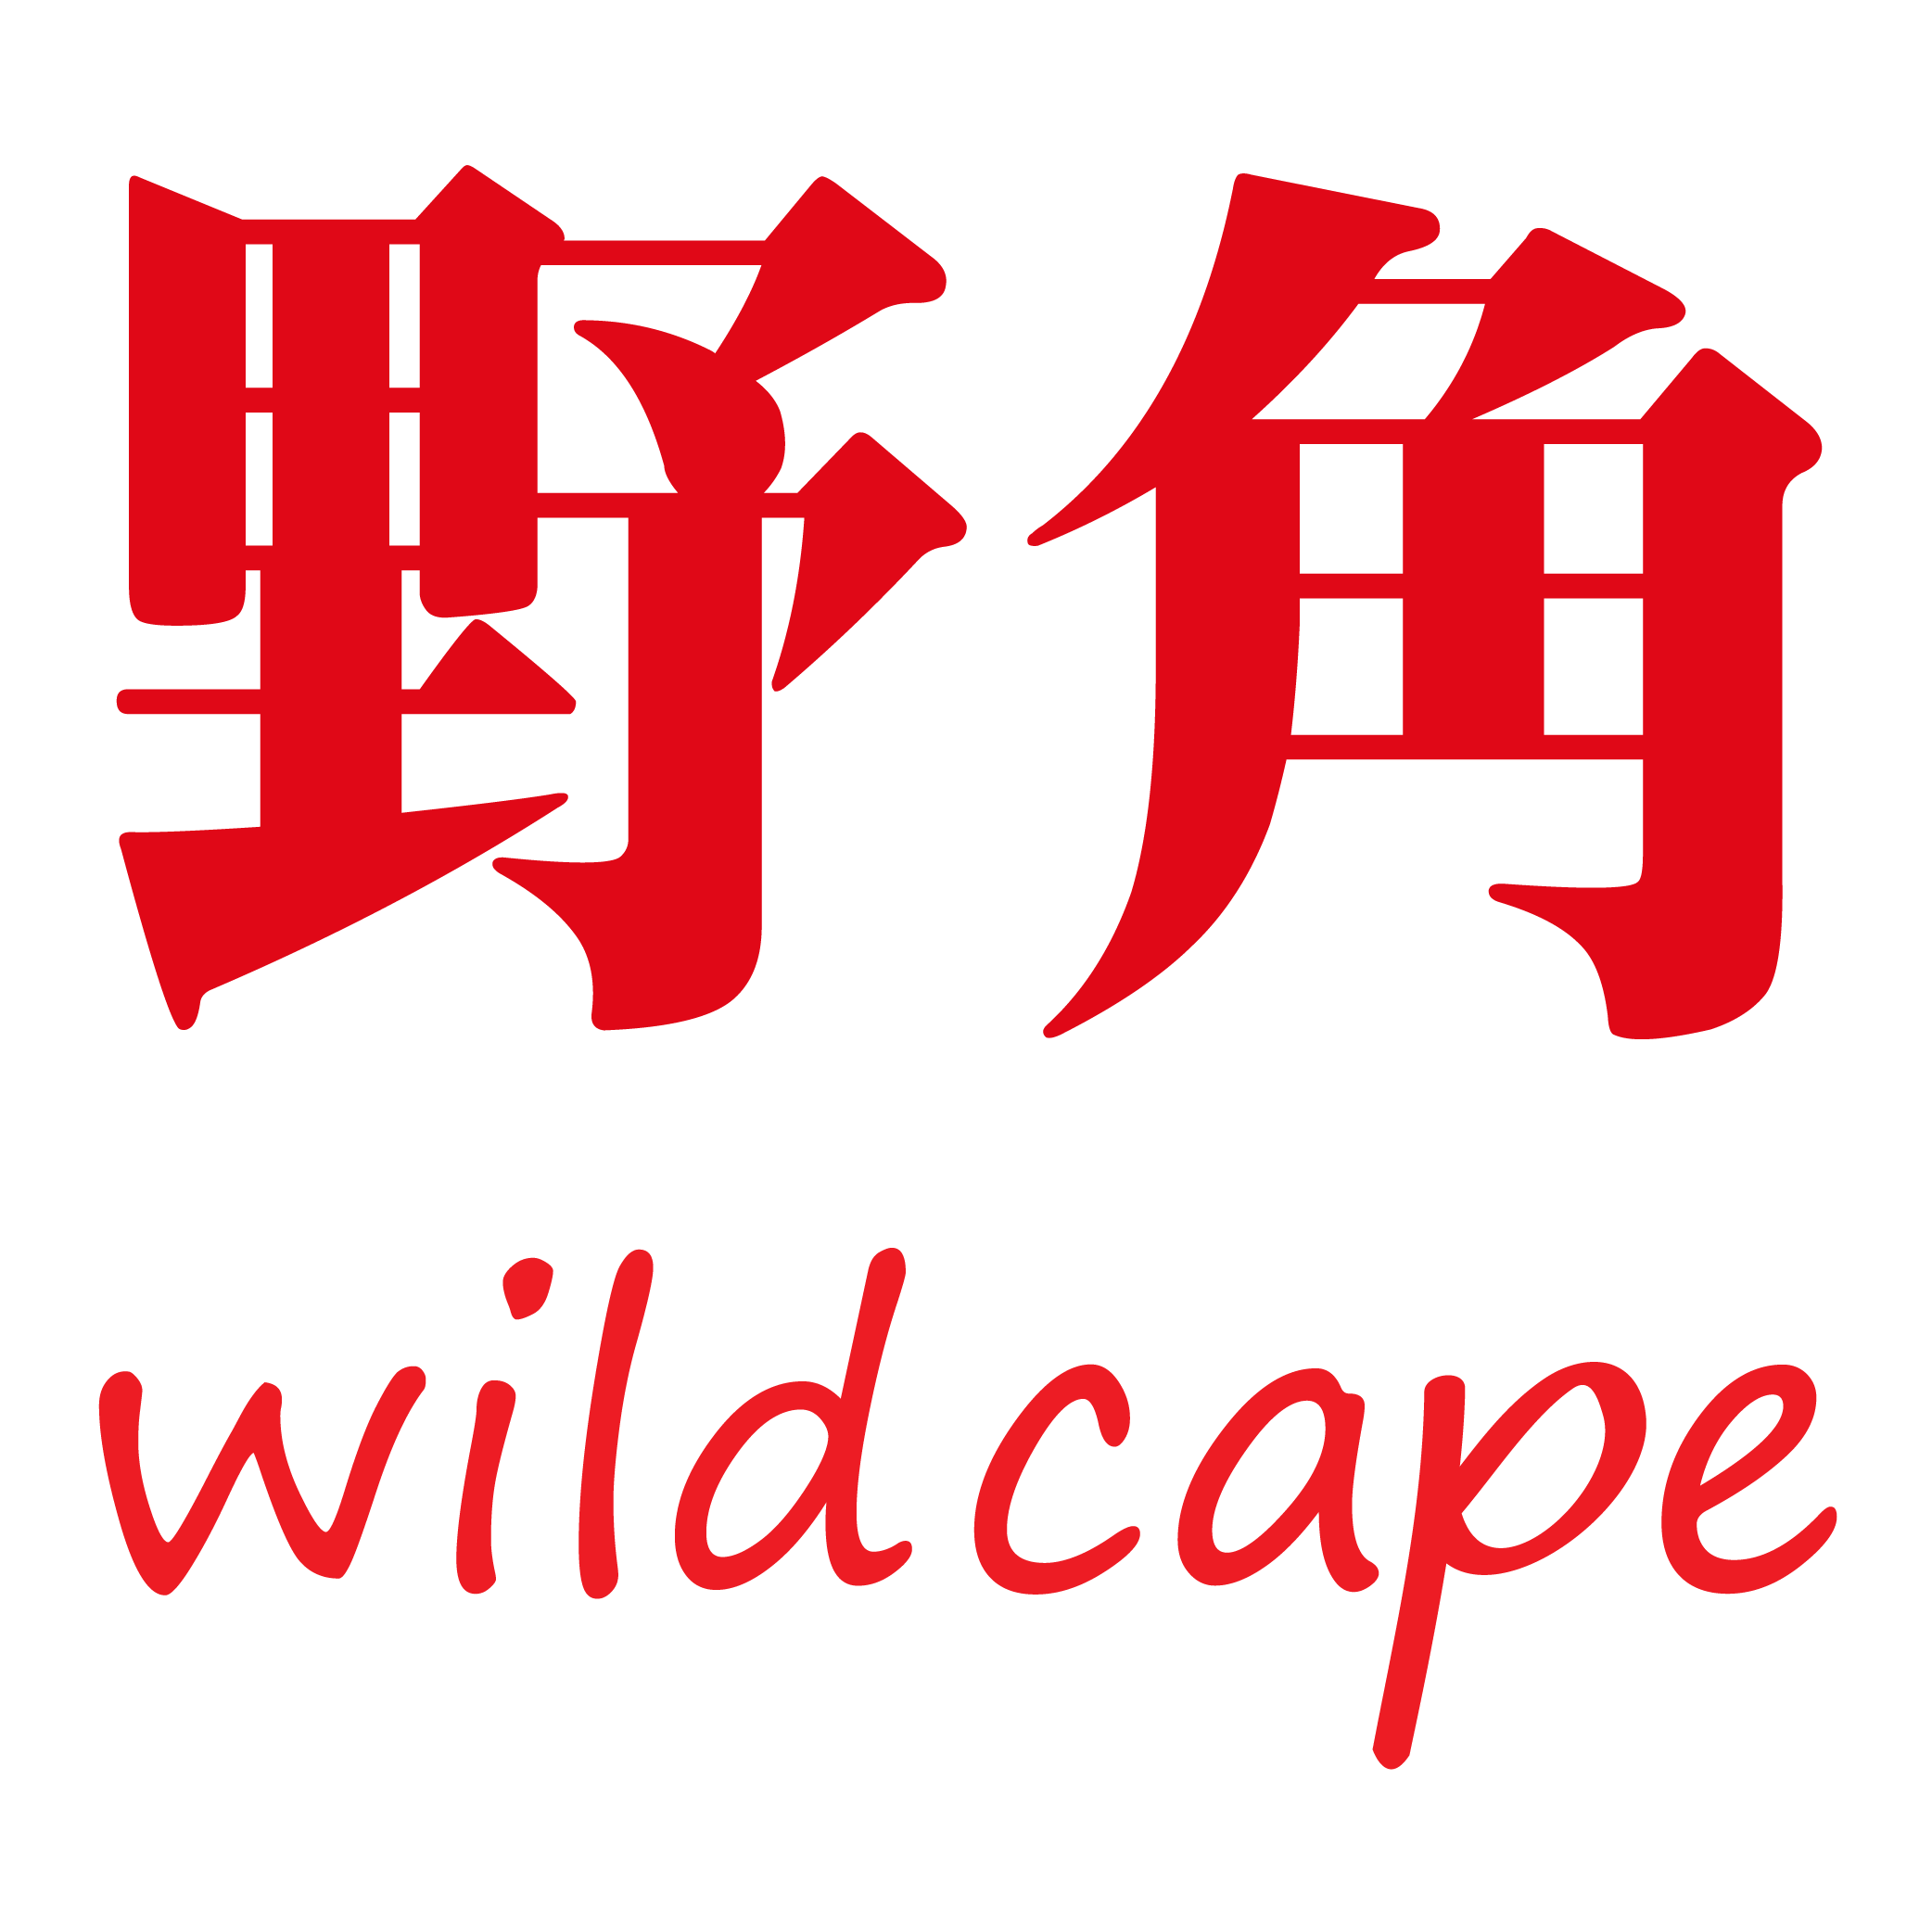 wildcape